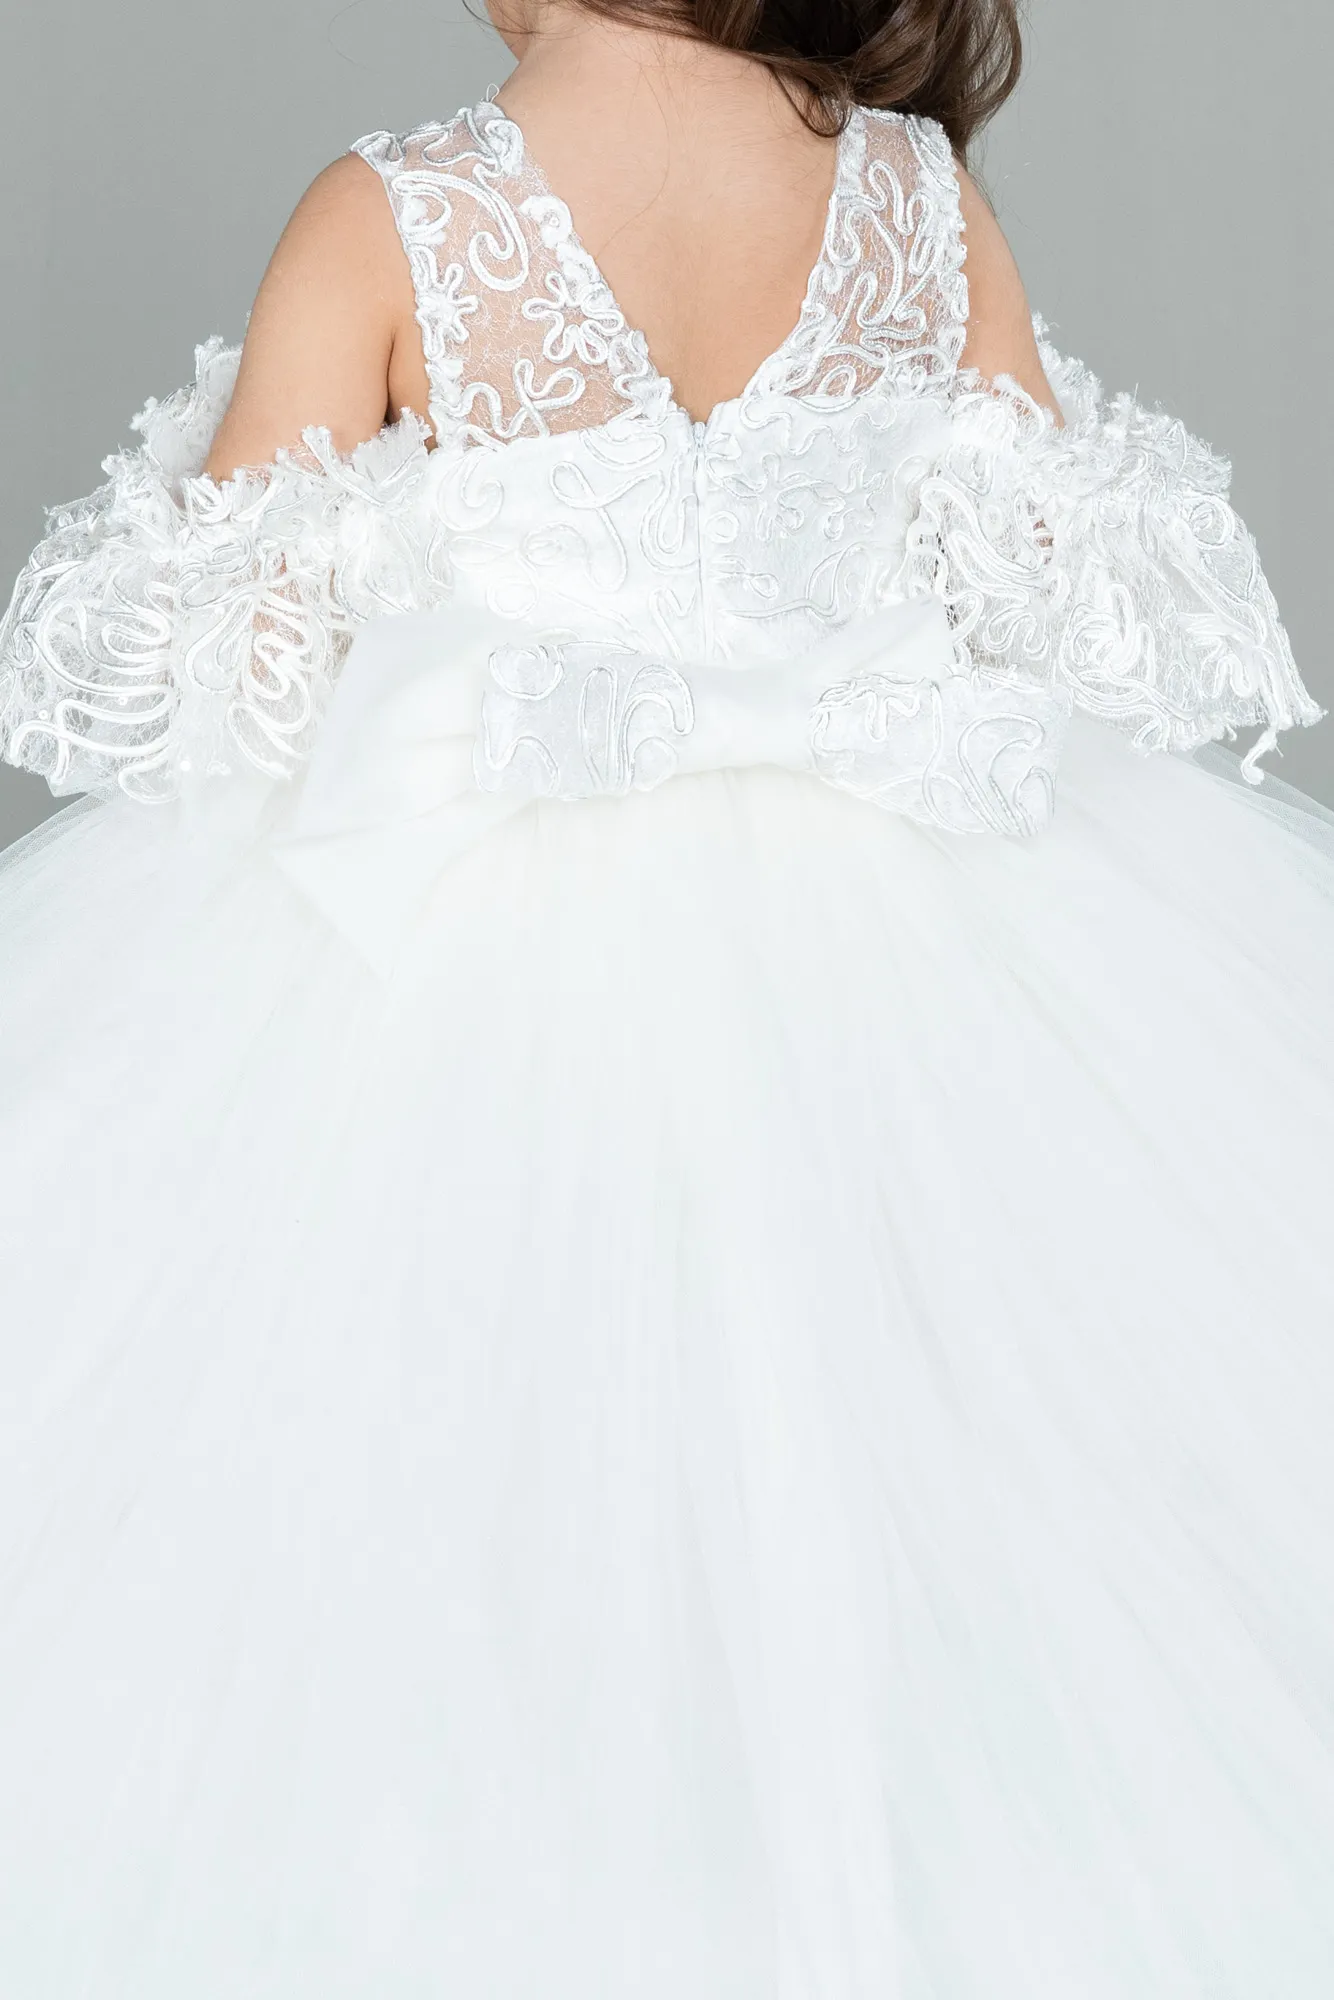 White-Long Kid Wedding Dress ABU3044